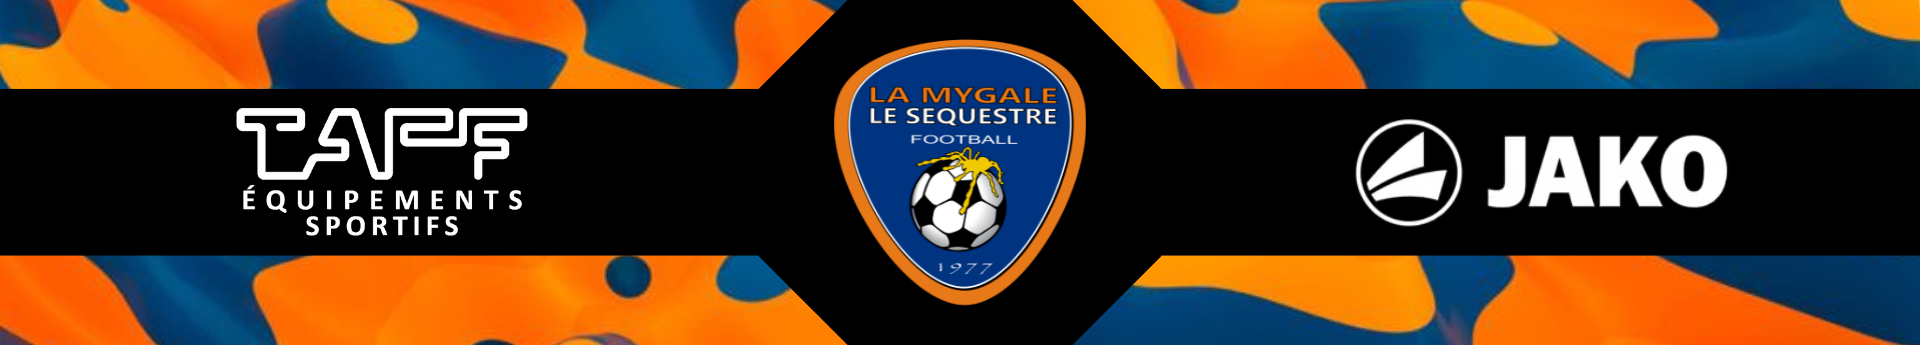 LA MYGALE SEQUESTRE FOOTBALL Title Image